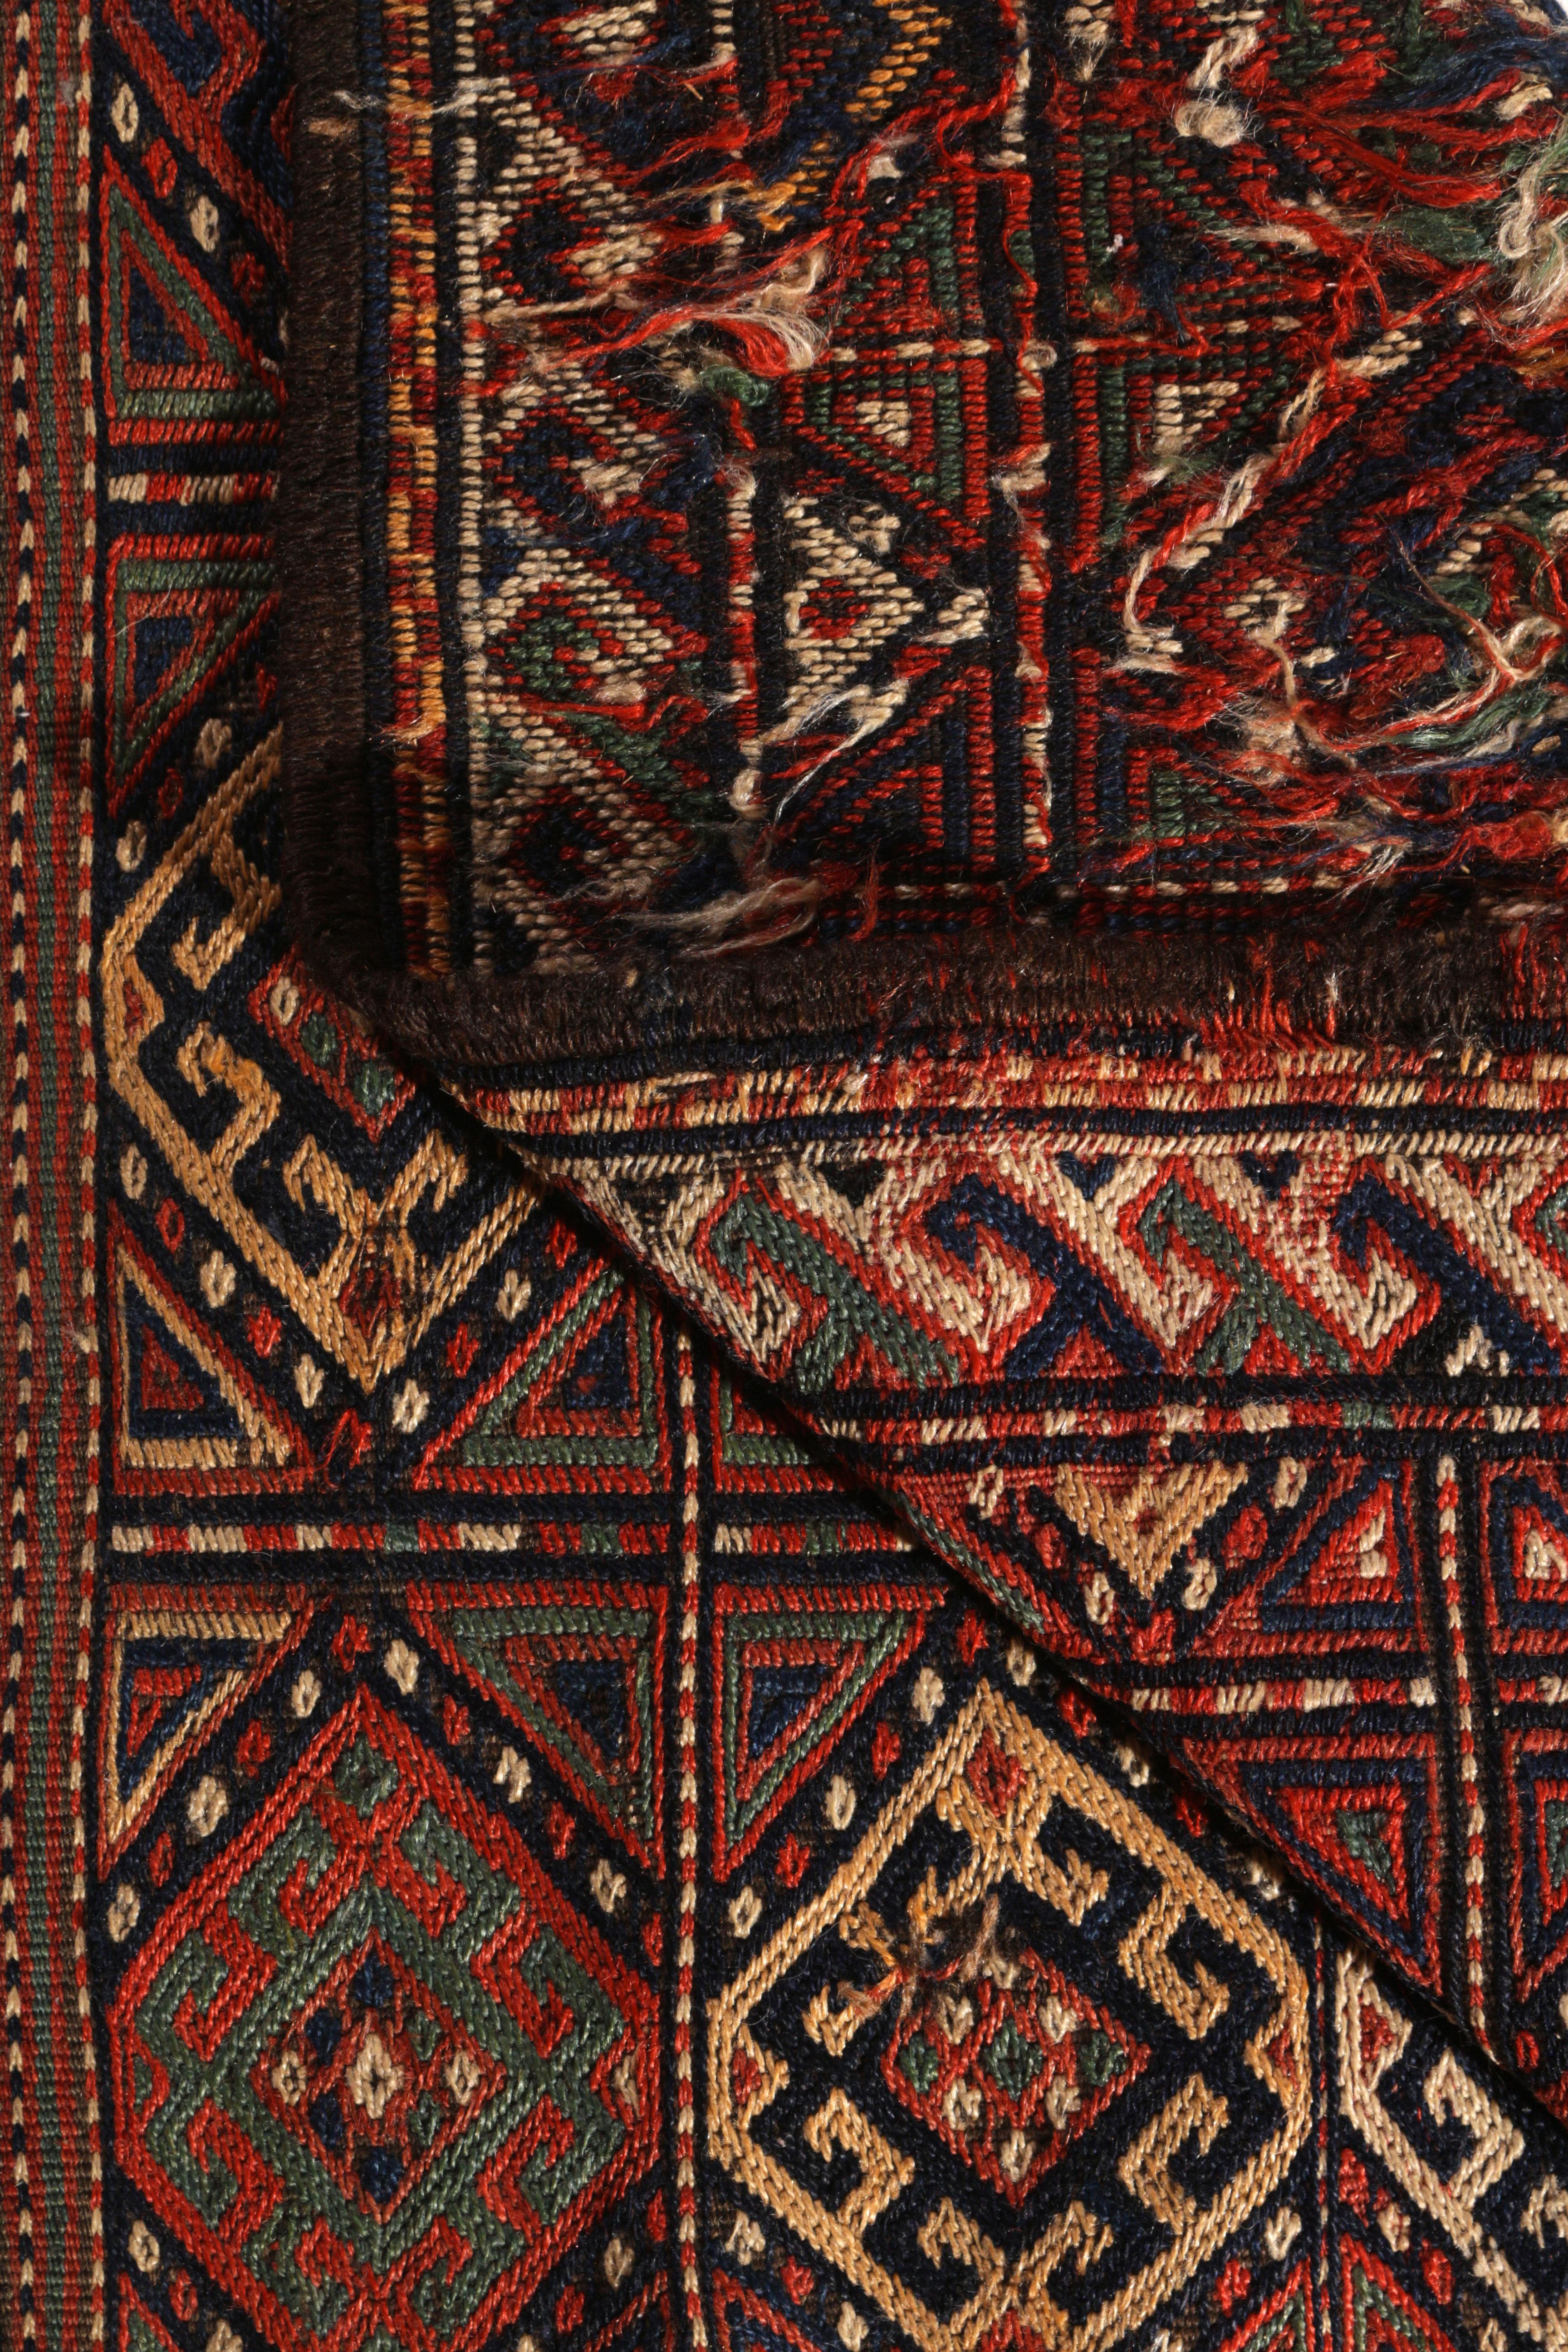 Late 19th Century Antique Soumak Kilim Red Russian Tribal Flat-Weave by Rug & Kilim